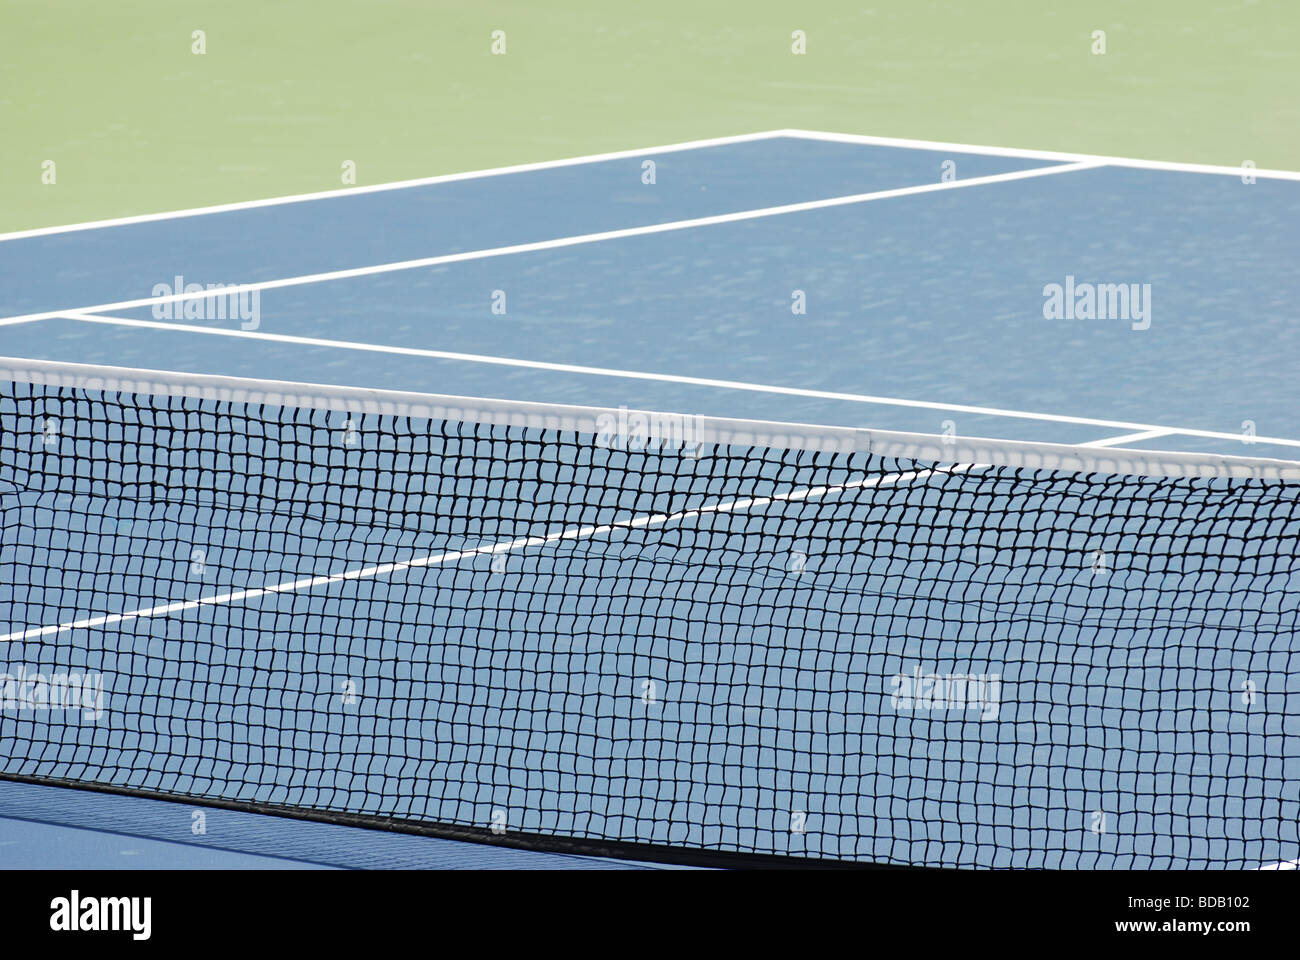 Tennis hard court Stock Photo